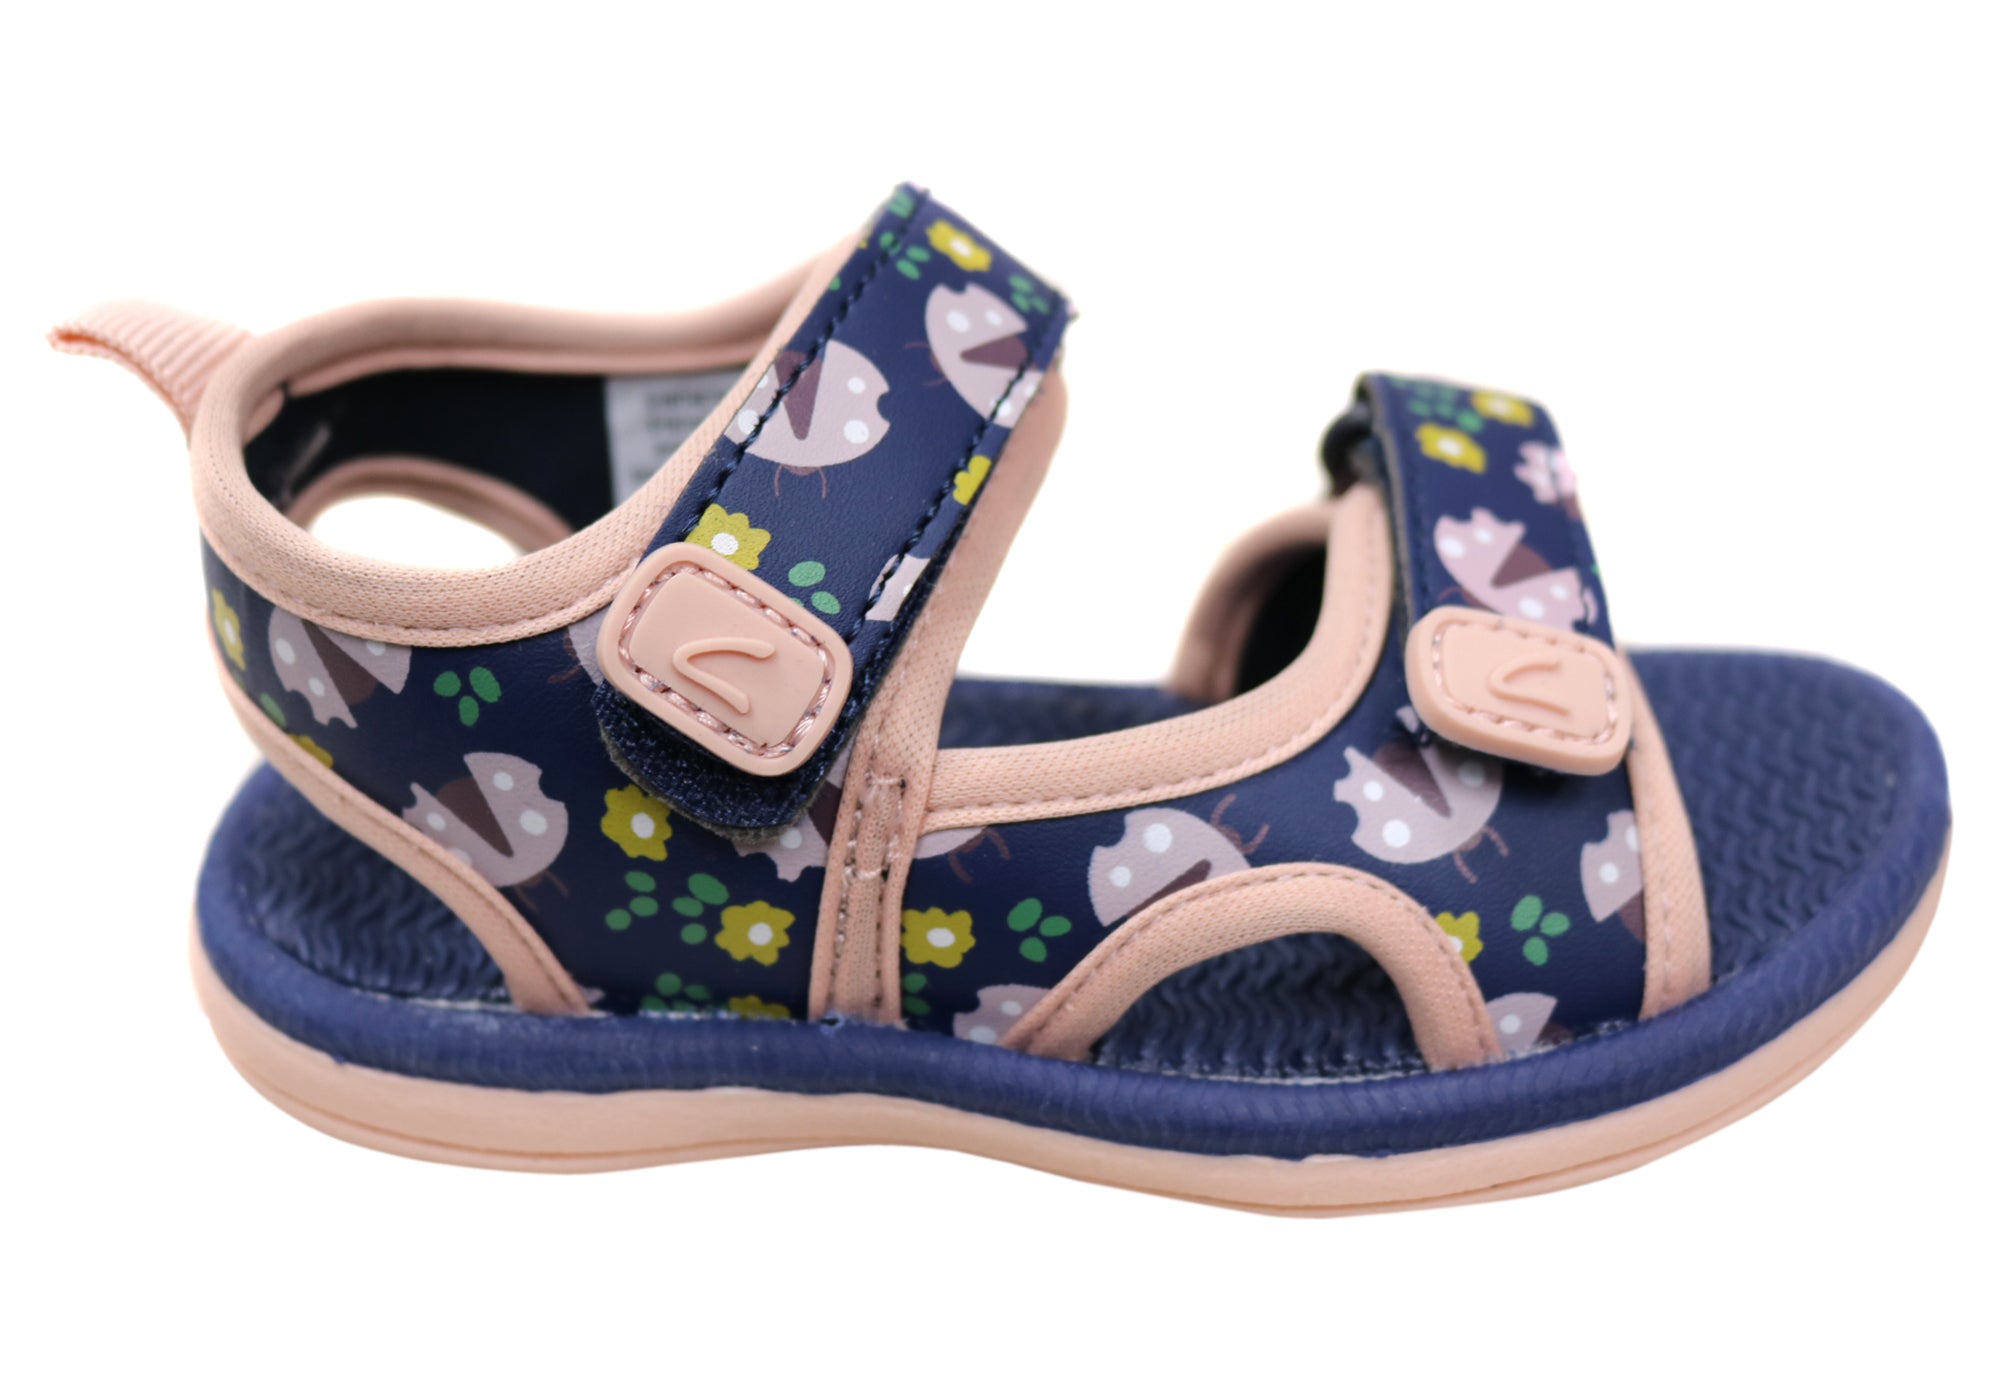 Ladies Clarks Open-Toe Sandals 'Ferni Fame' | eBay